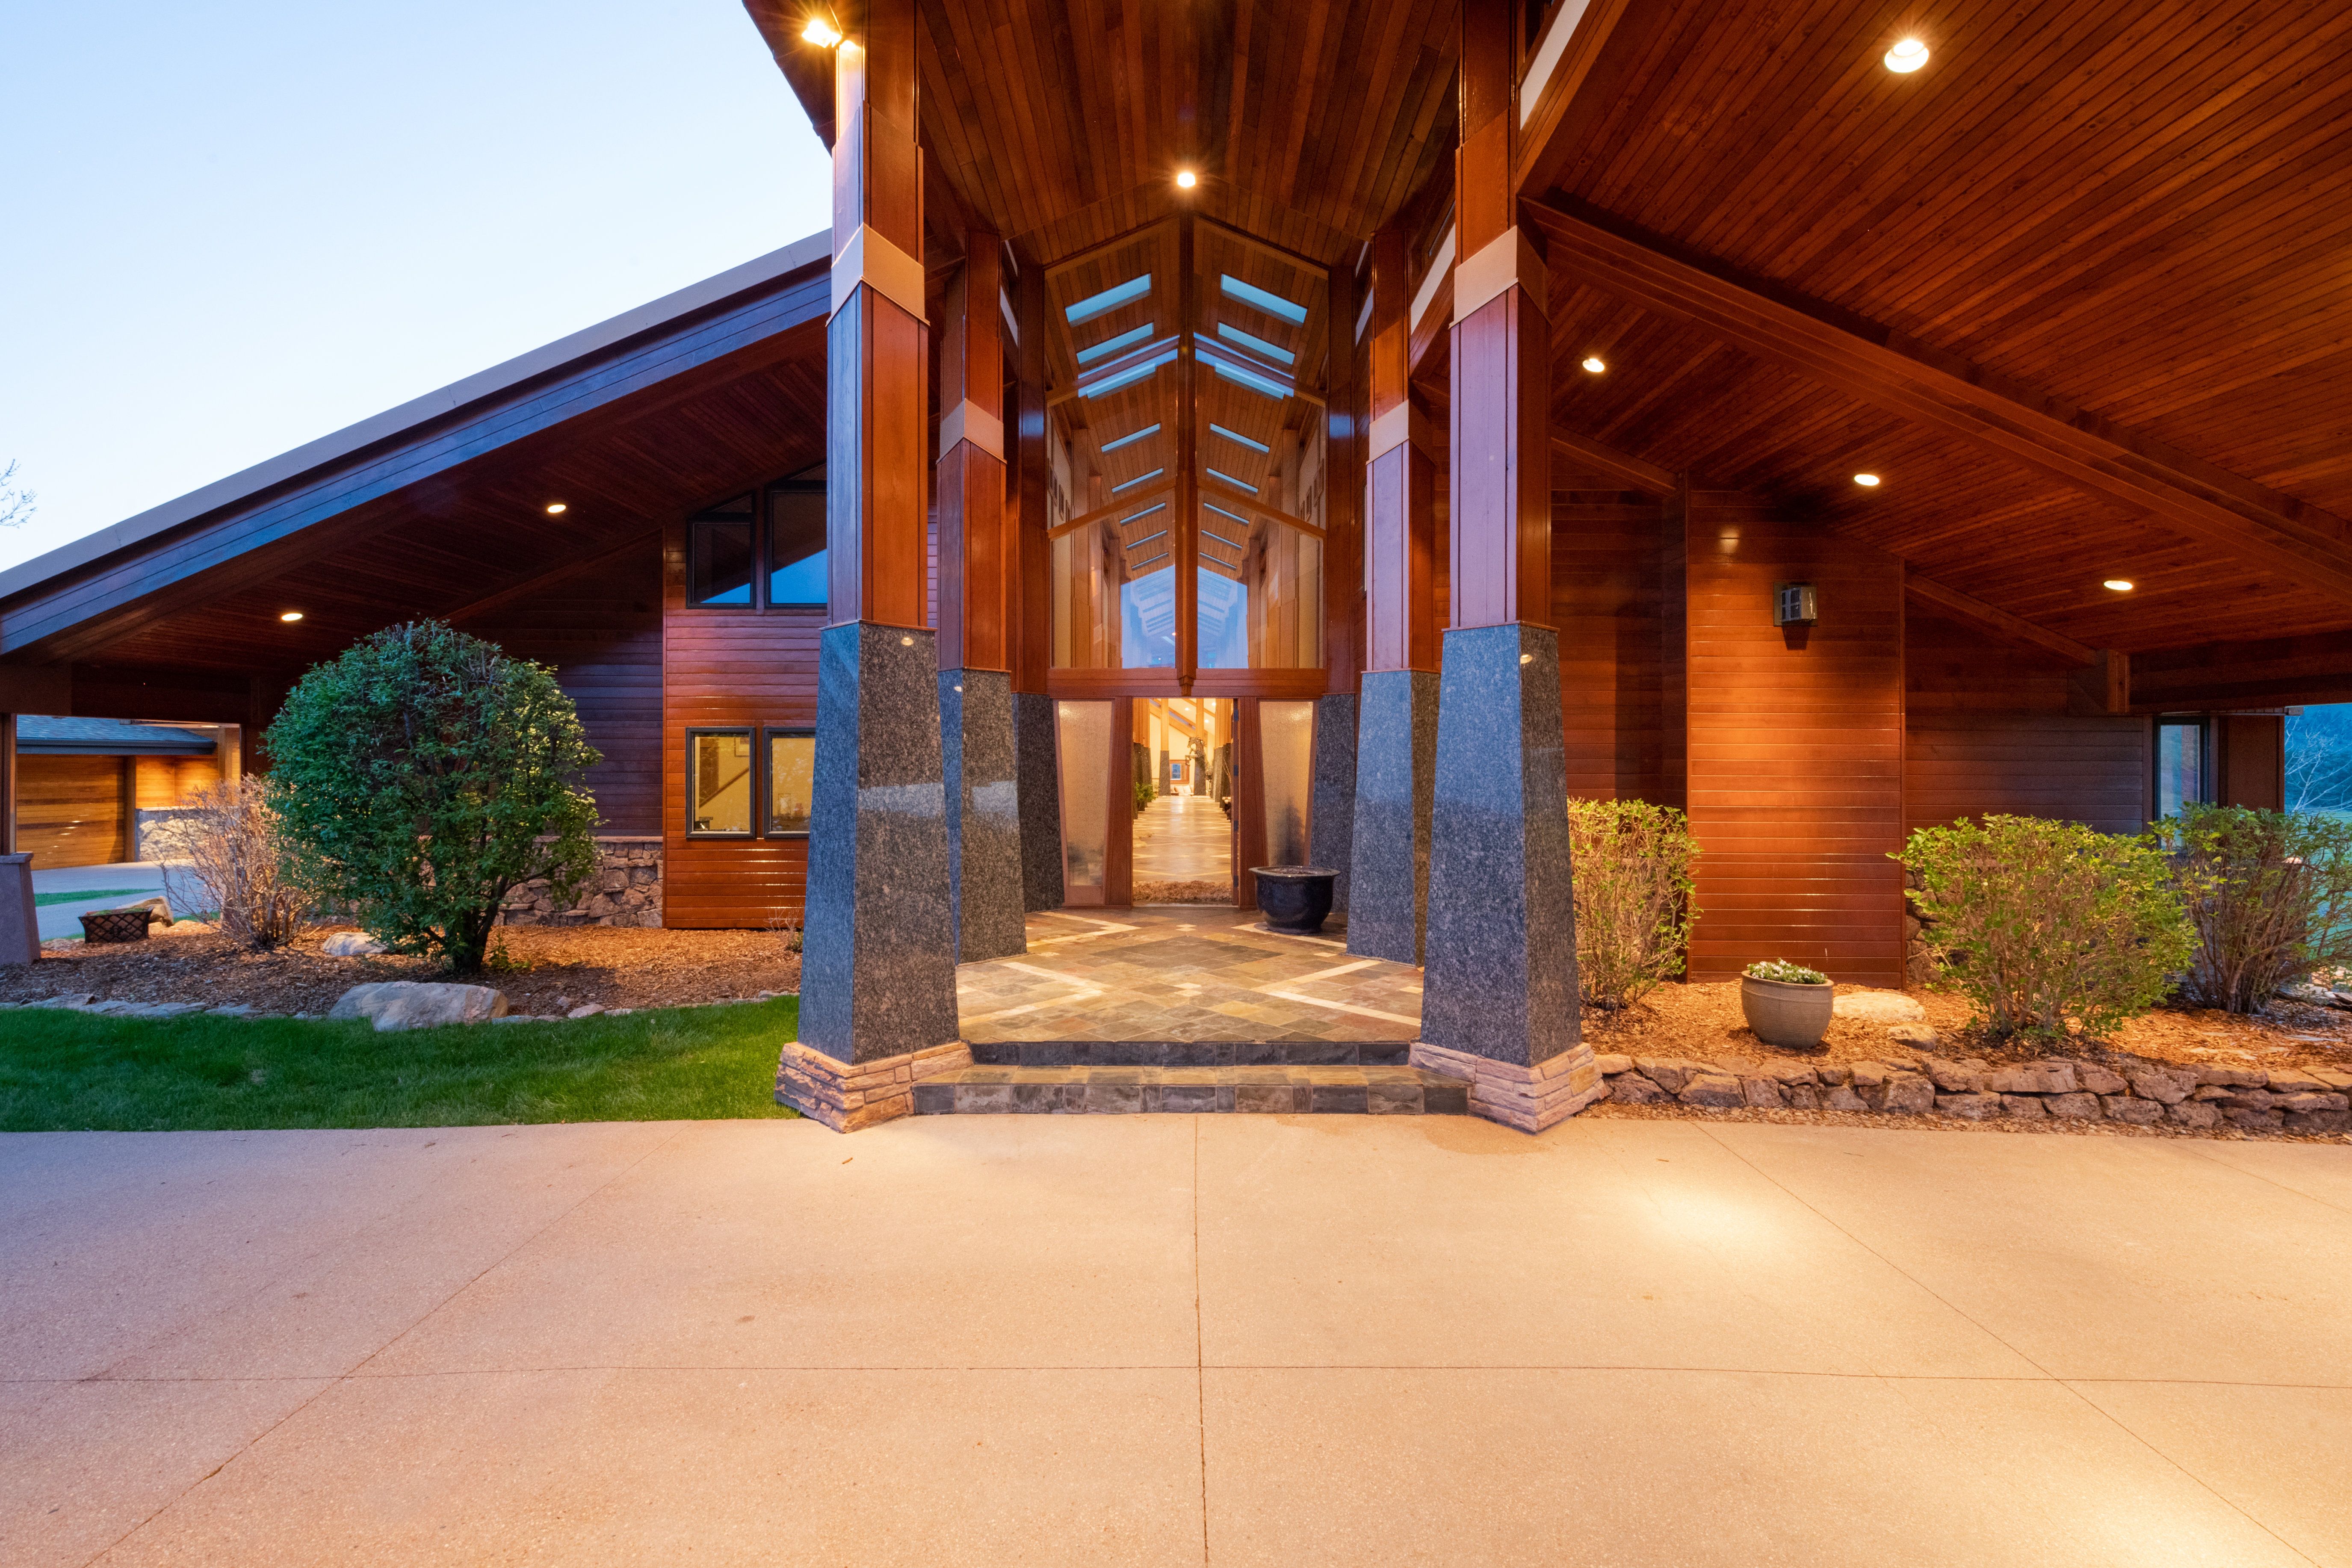 Colorado Mountain house on 35 acres asks $7M front entrance